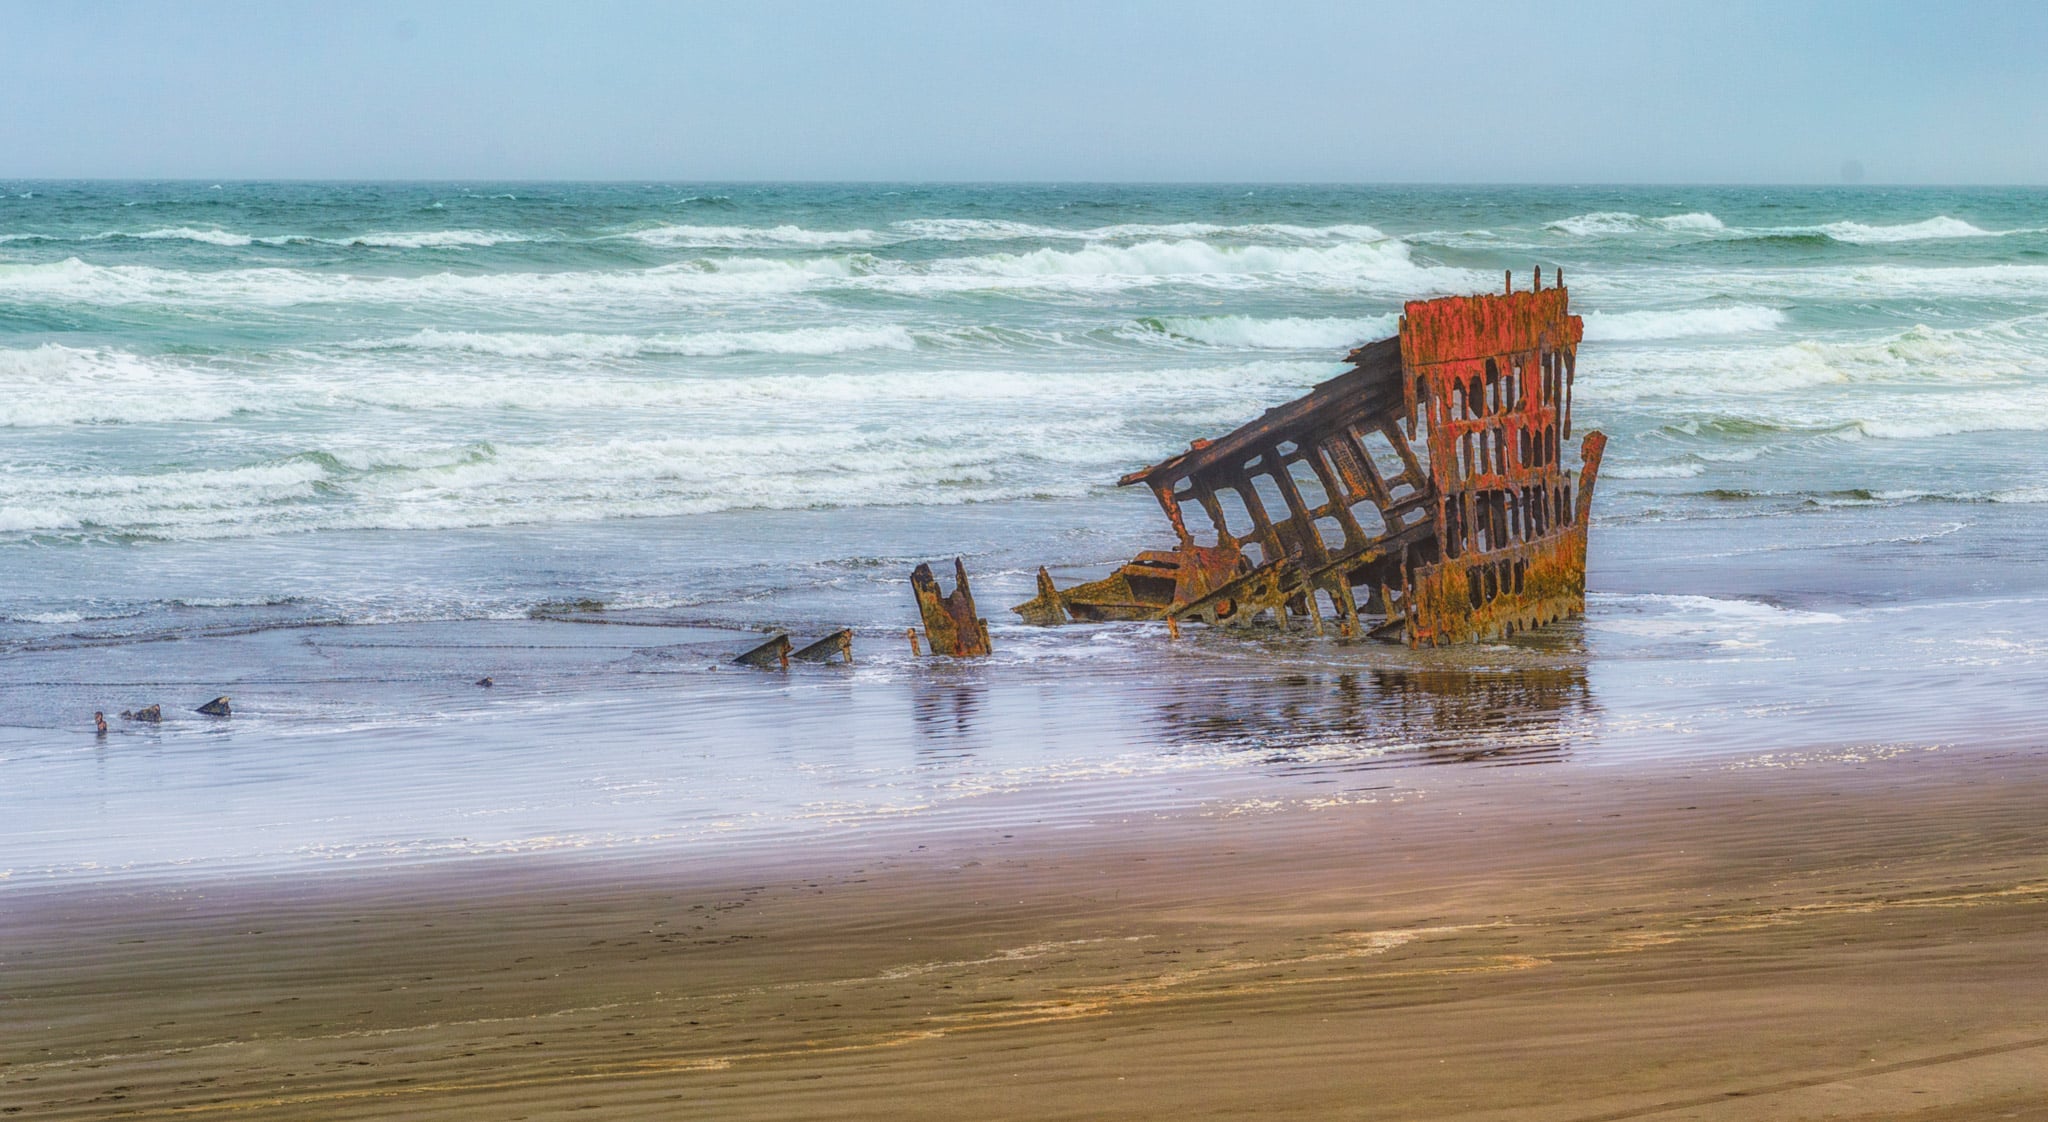 Peter Iredale Shipwreck - Oregon's Pacific coast